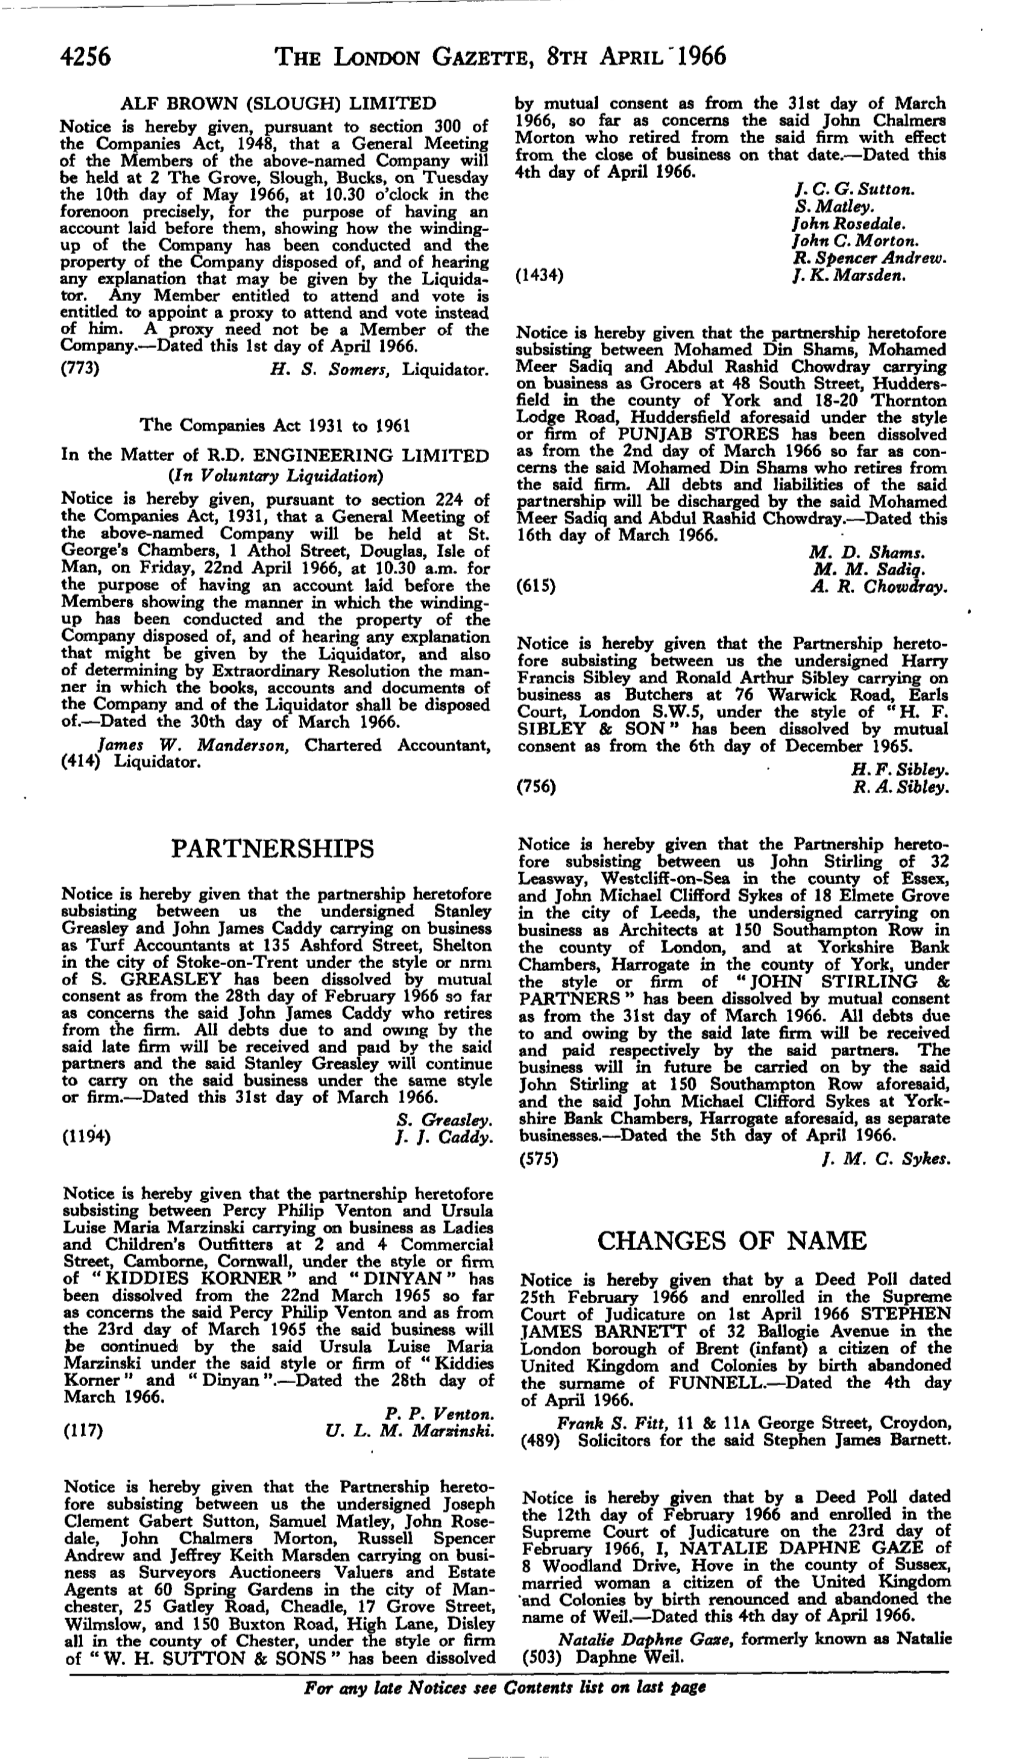 4256 the London Gazette, Sth April "1966 Partnerships